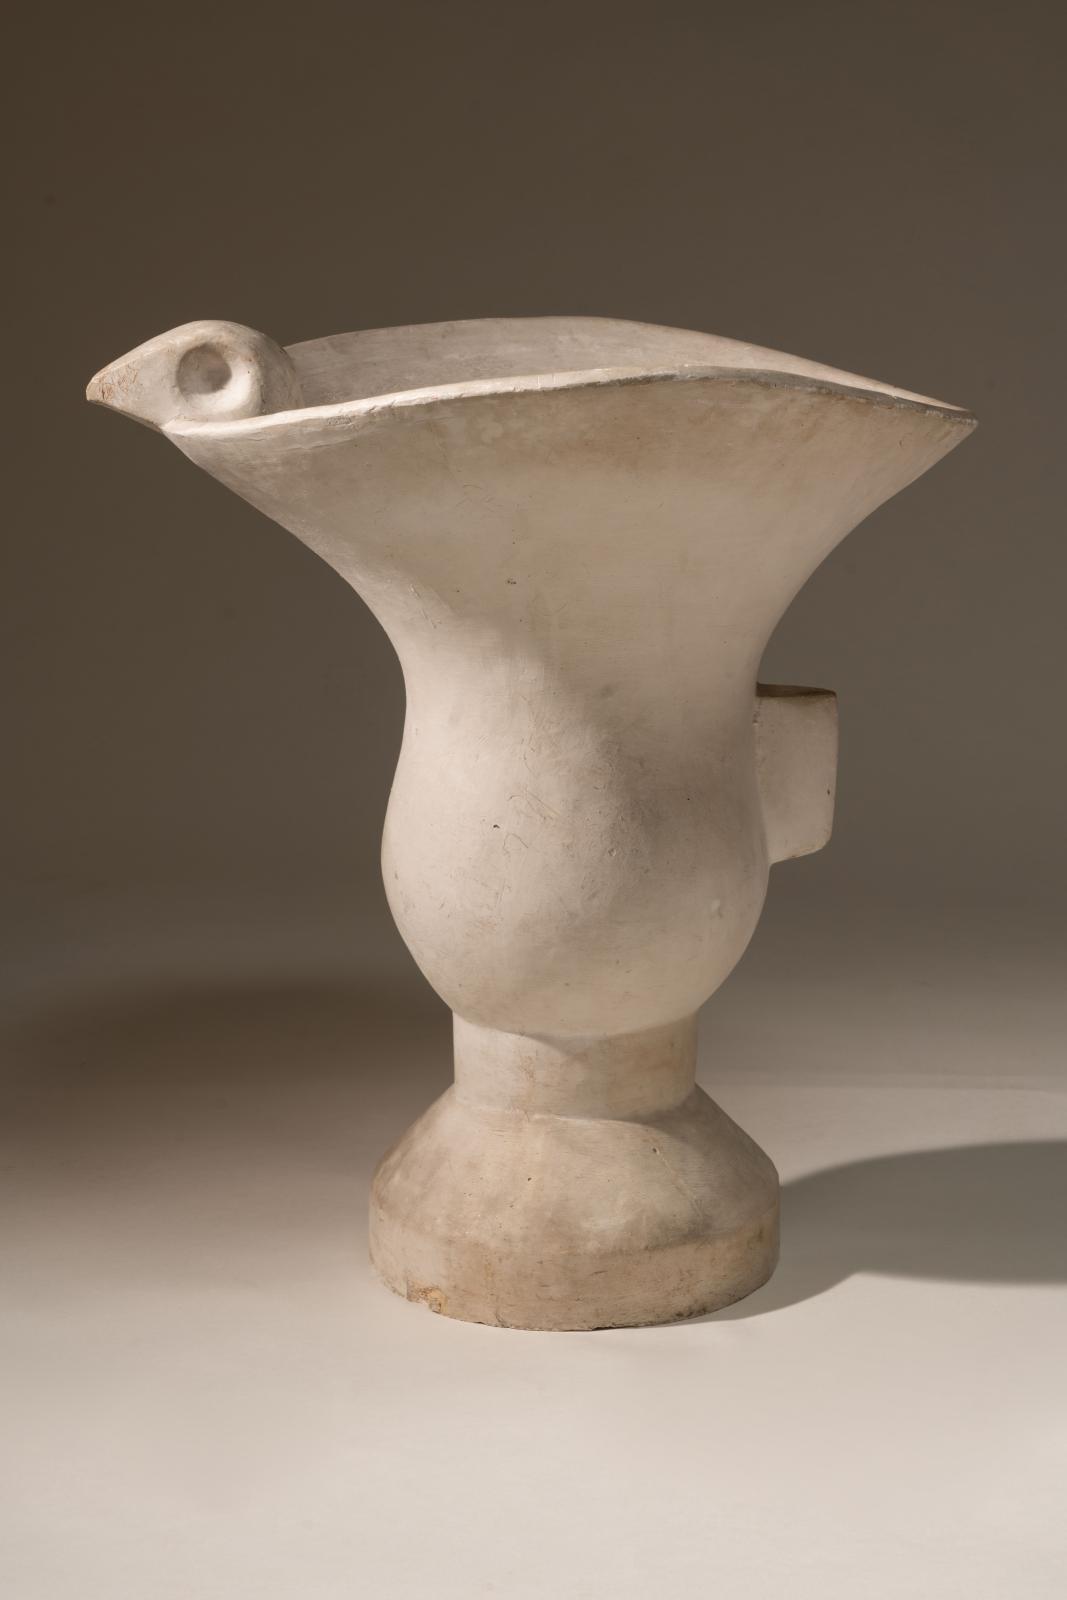 Alberto Giacometti, Vase à l’oiseau, plâtre blanc, vers 1930 © Succession Giacometti / ADAGP, Paris, 2022 PHOTO ARC EN SEINE